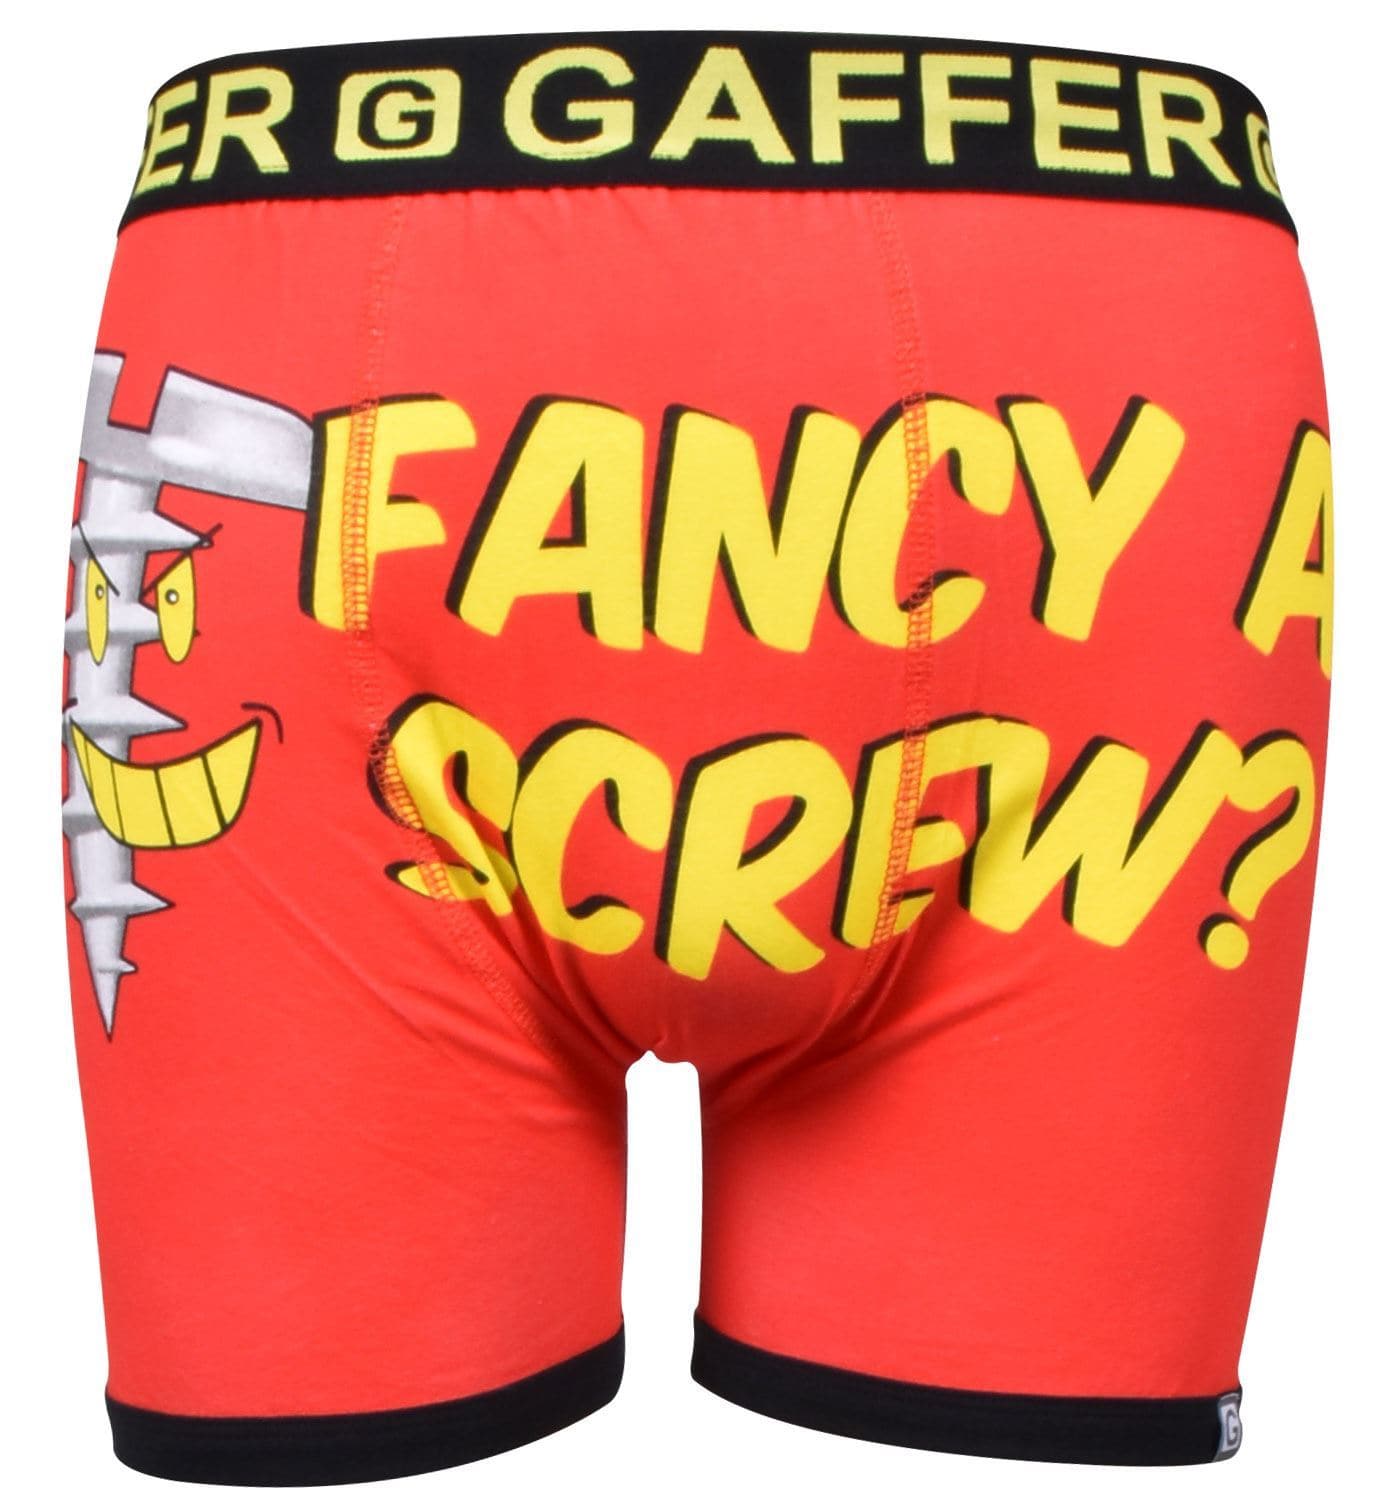 Gaffer Boxers Screw